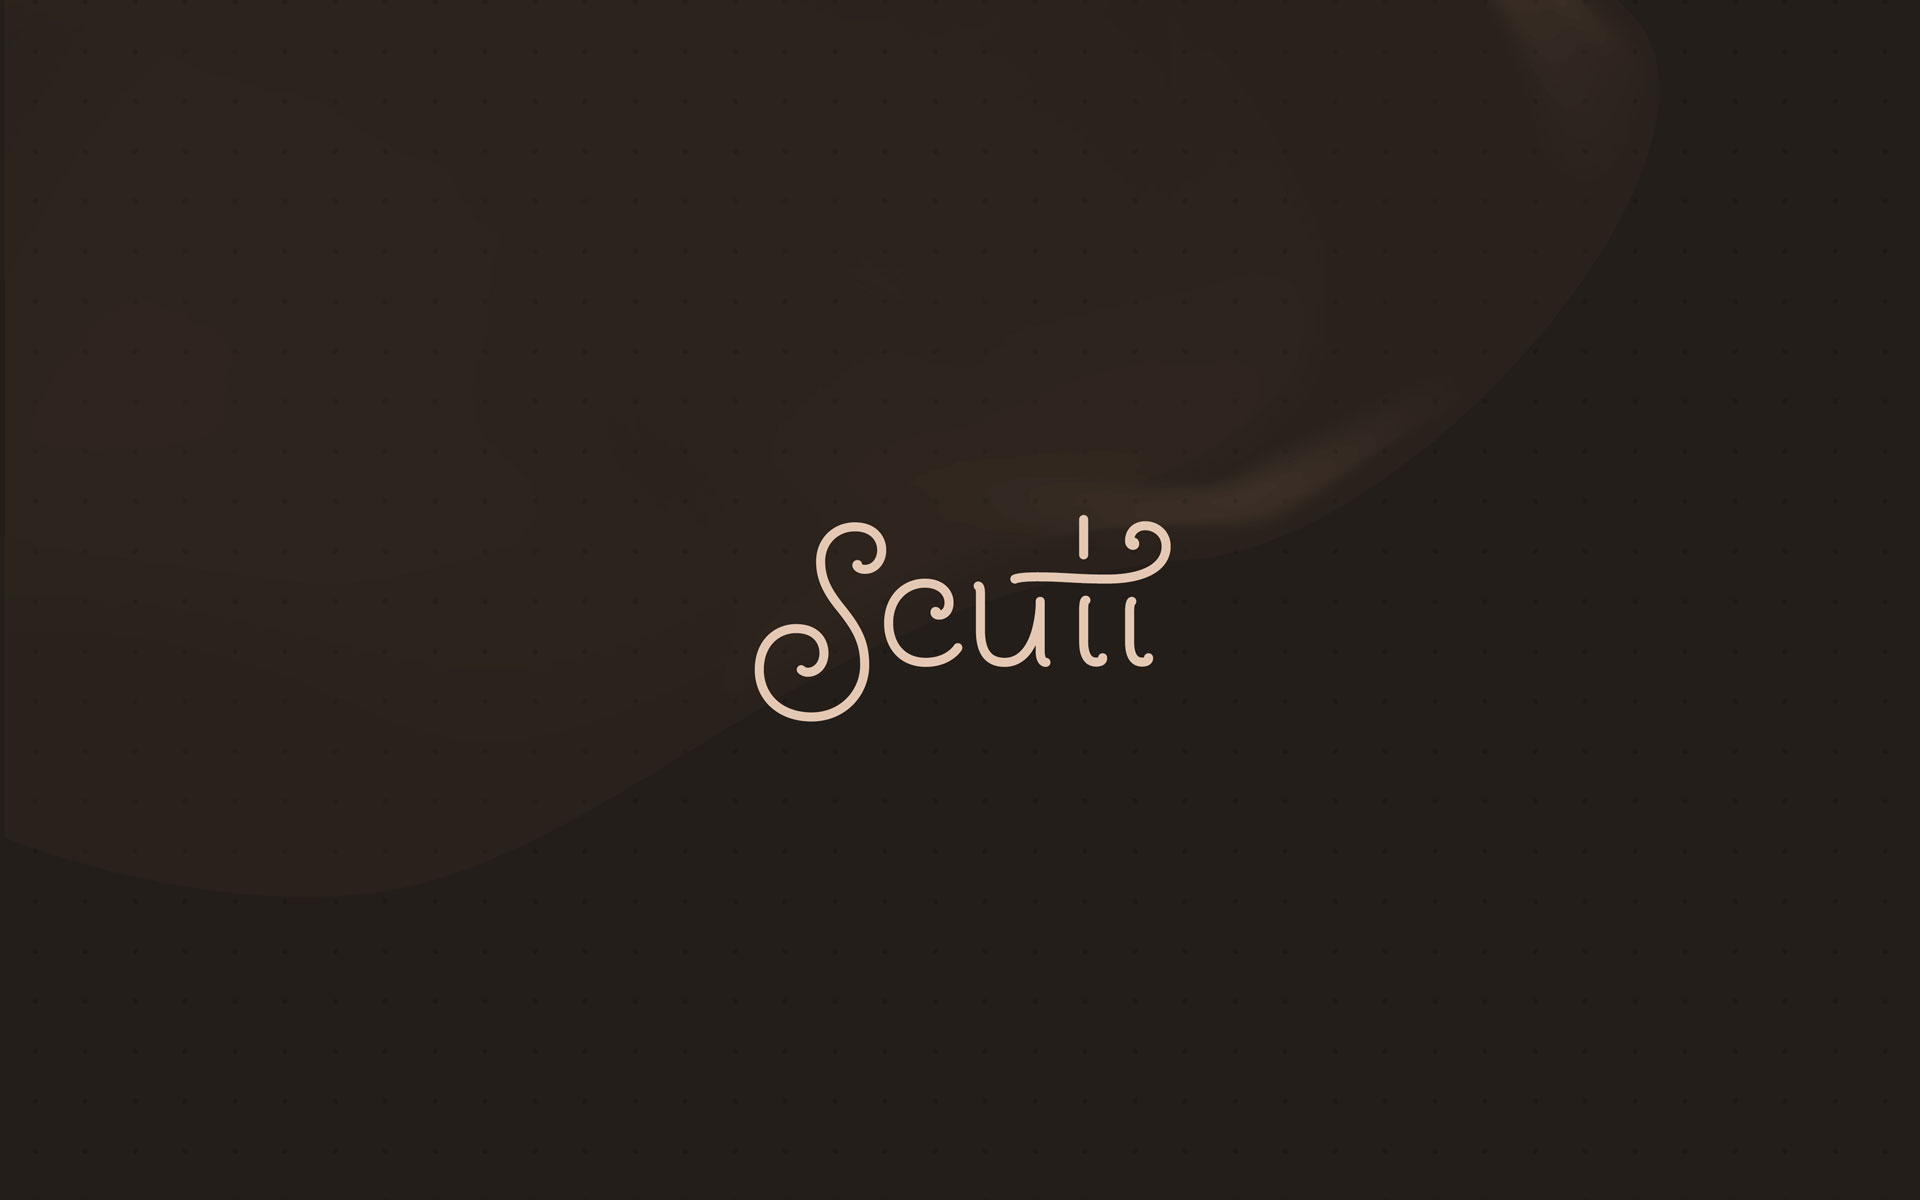 Scuti - Gourmet Desserts & Chocolates - Identity Design - Logotype with bg